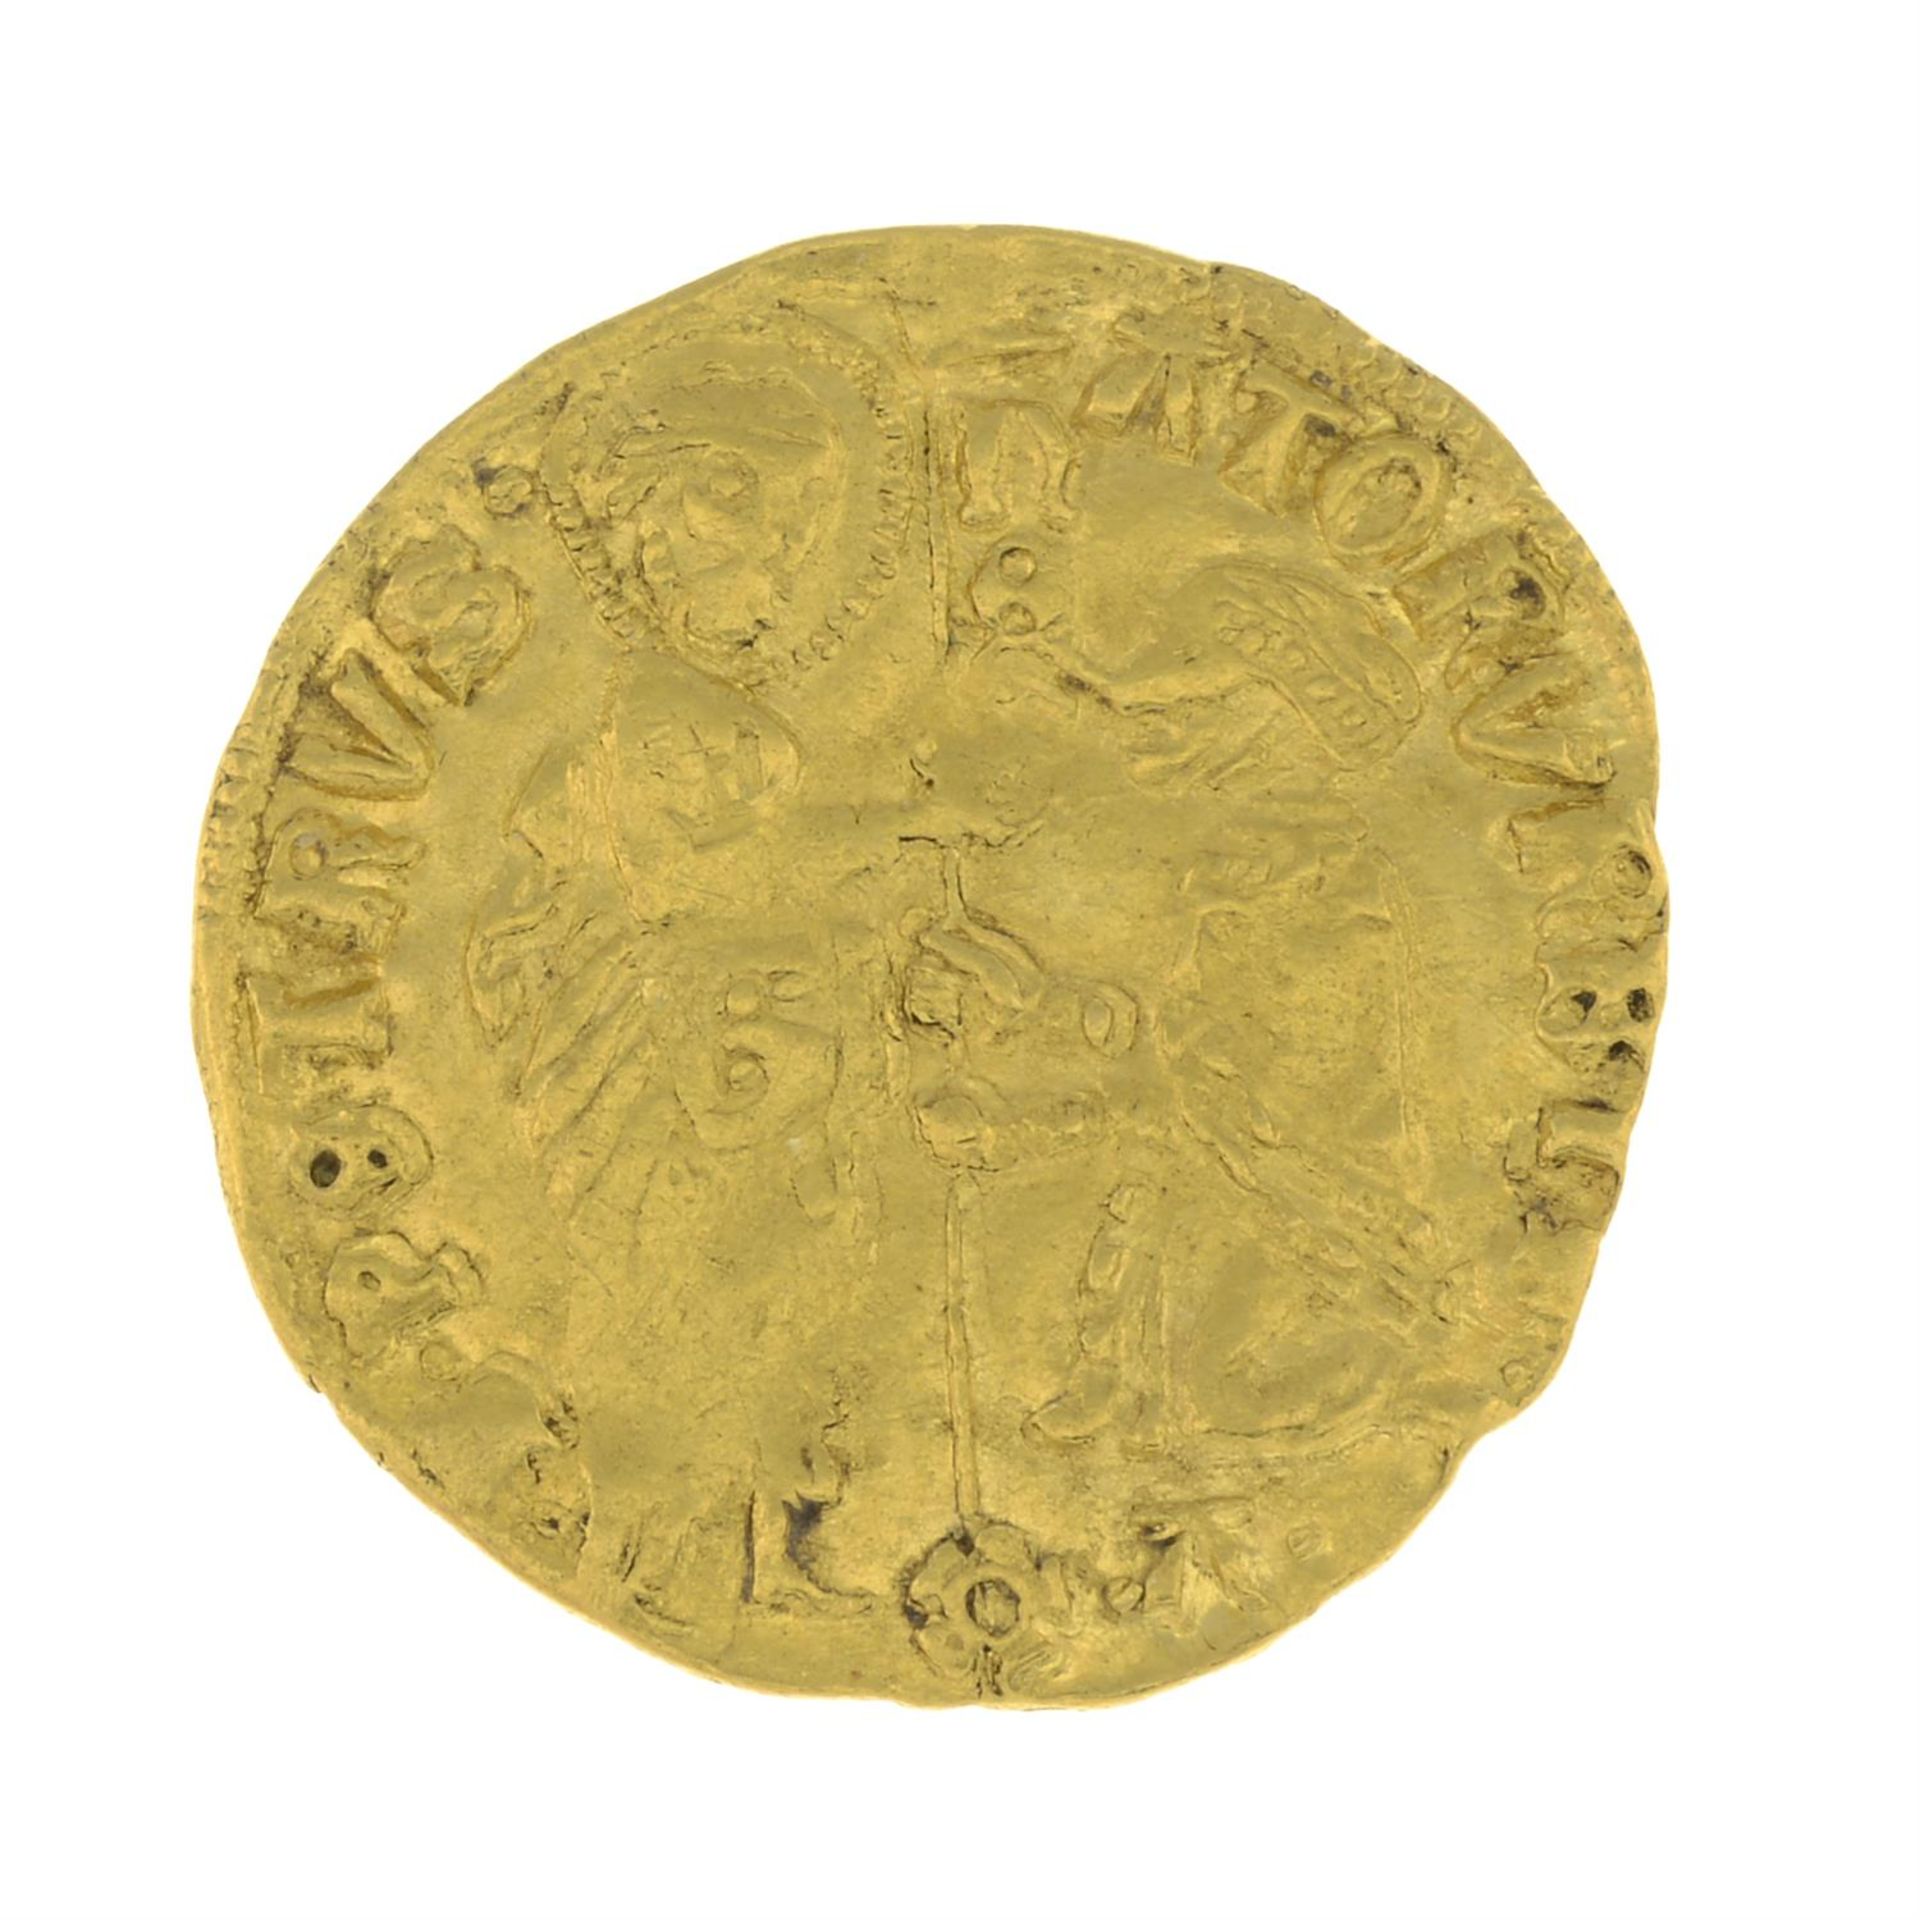 Italy, Rome, Vatican, gold Ducat (1350-1439).